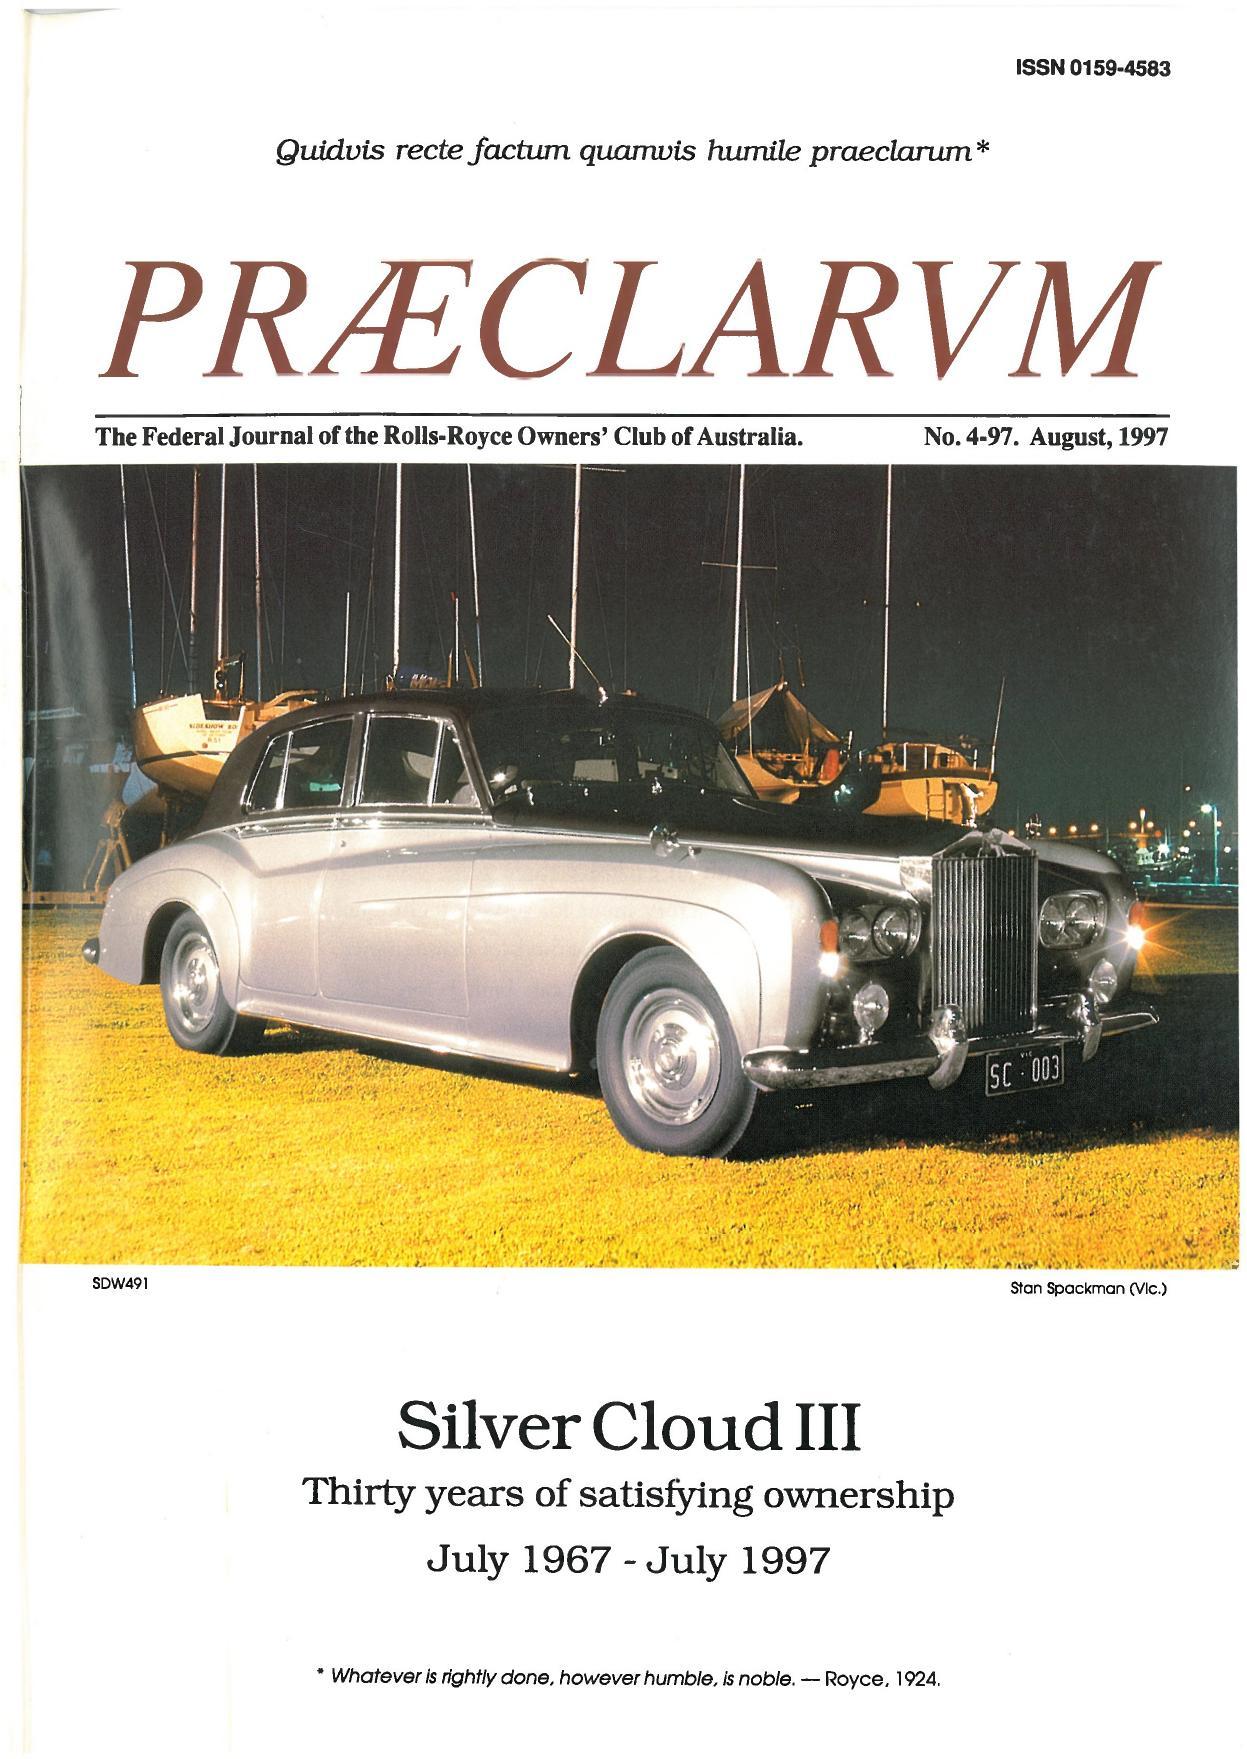 praeclarvm-the-federal-journal-of-the-rolls-royce-owners-club-of-australia-no-4-97-august-1997.pdf